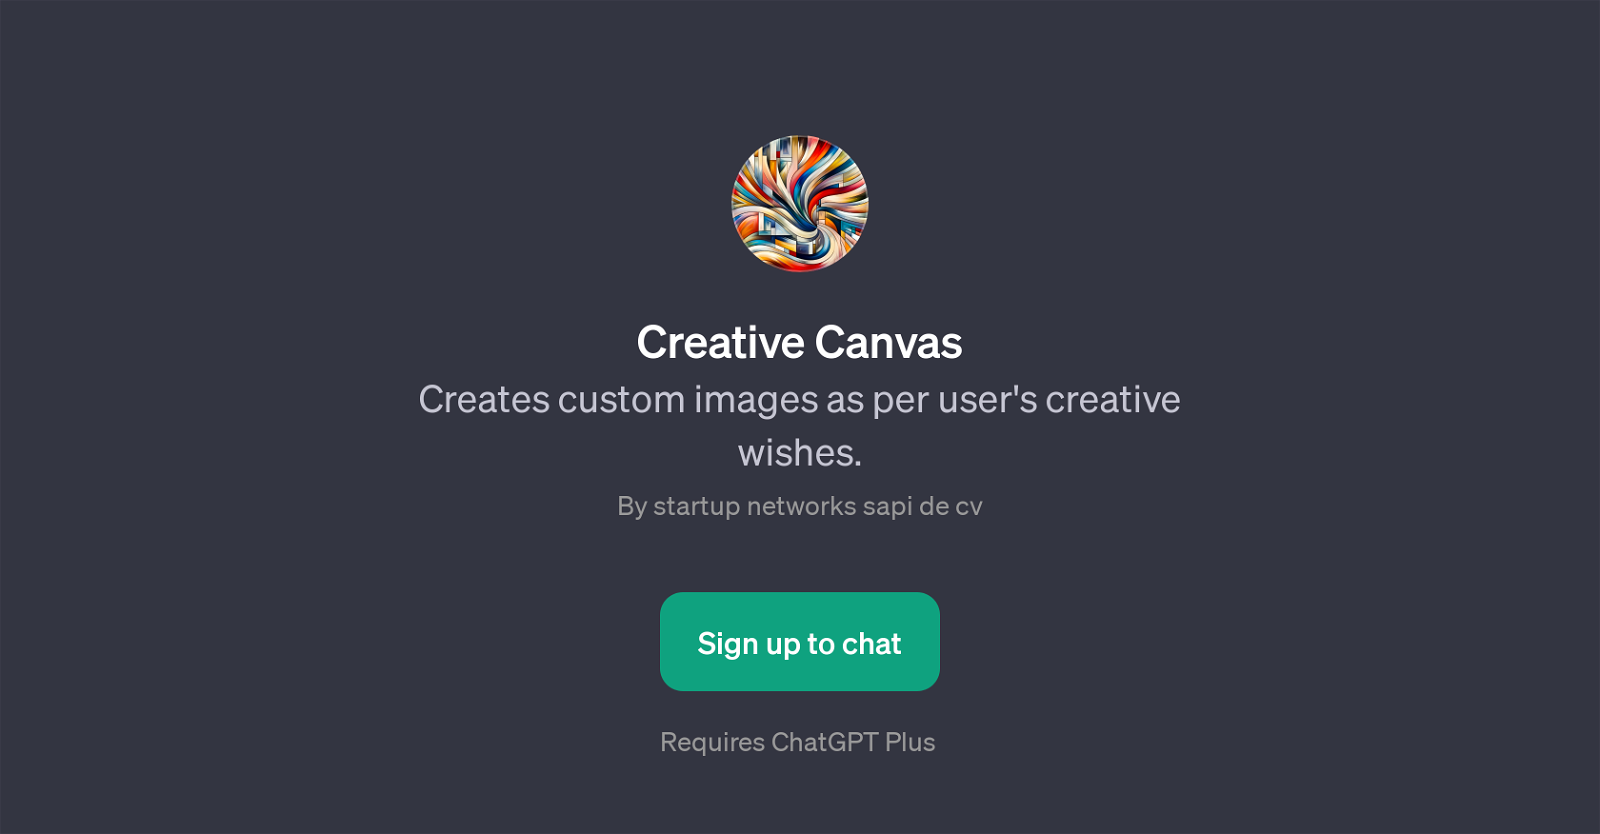 Creative Canvas website